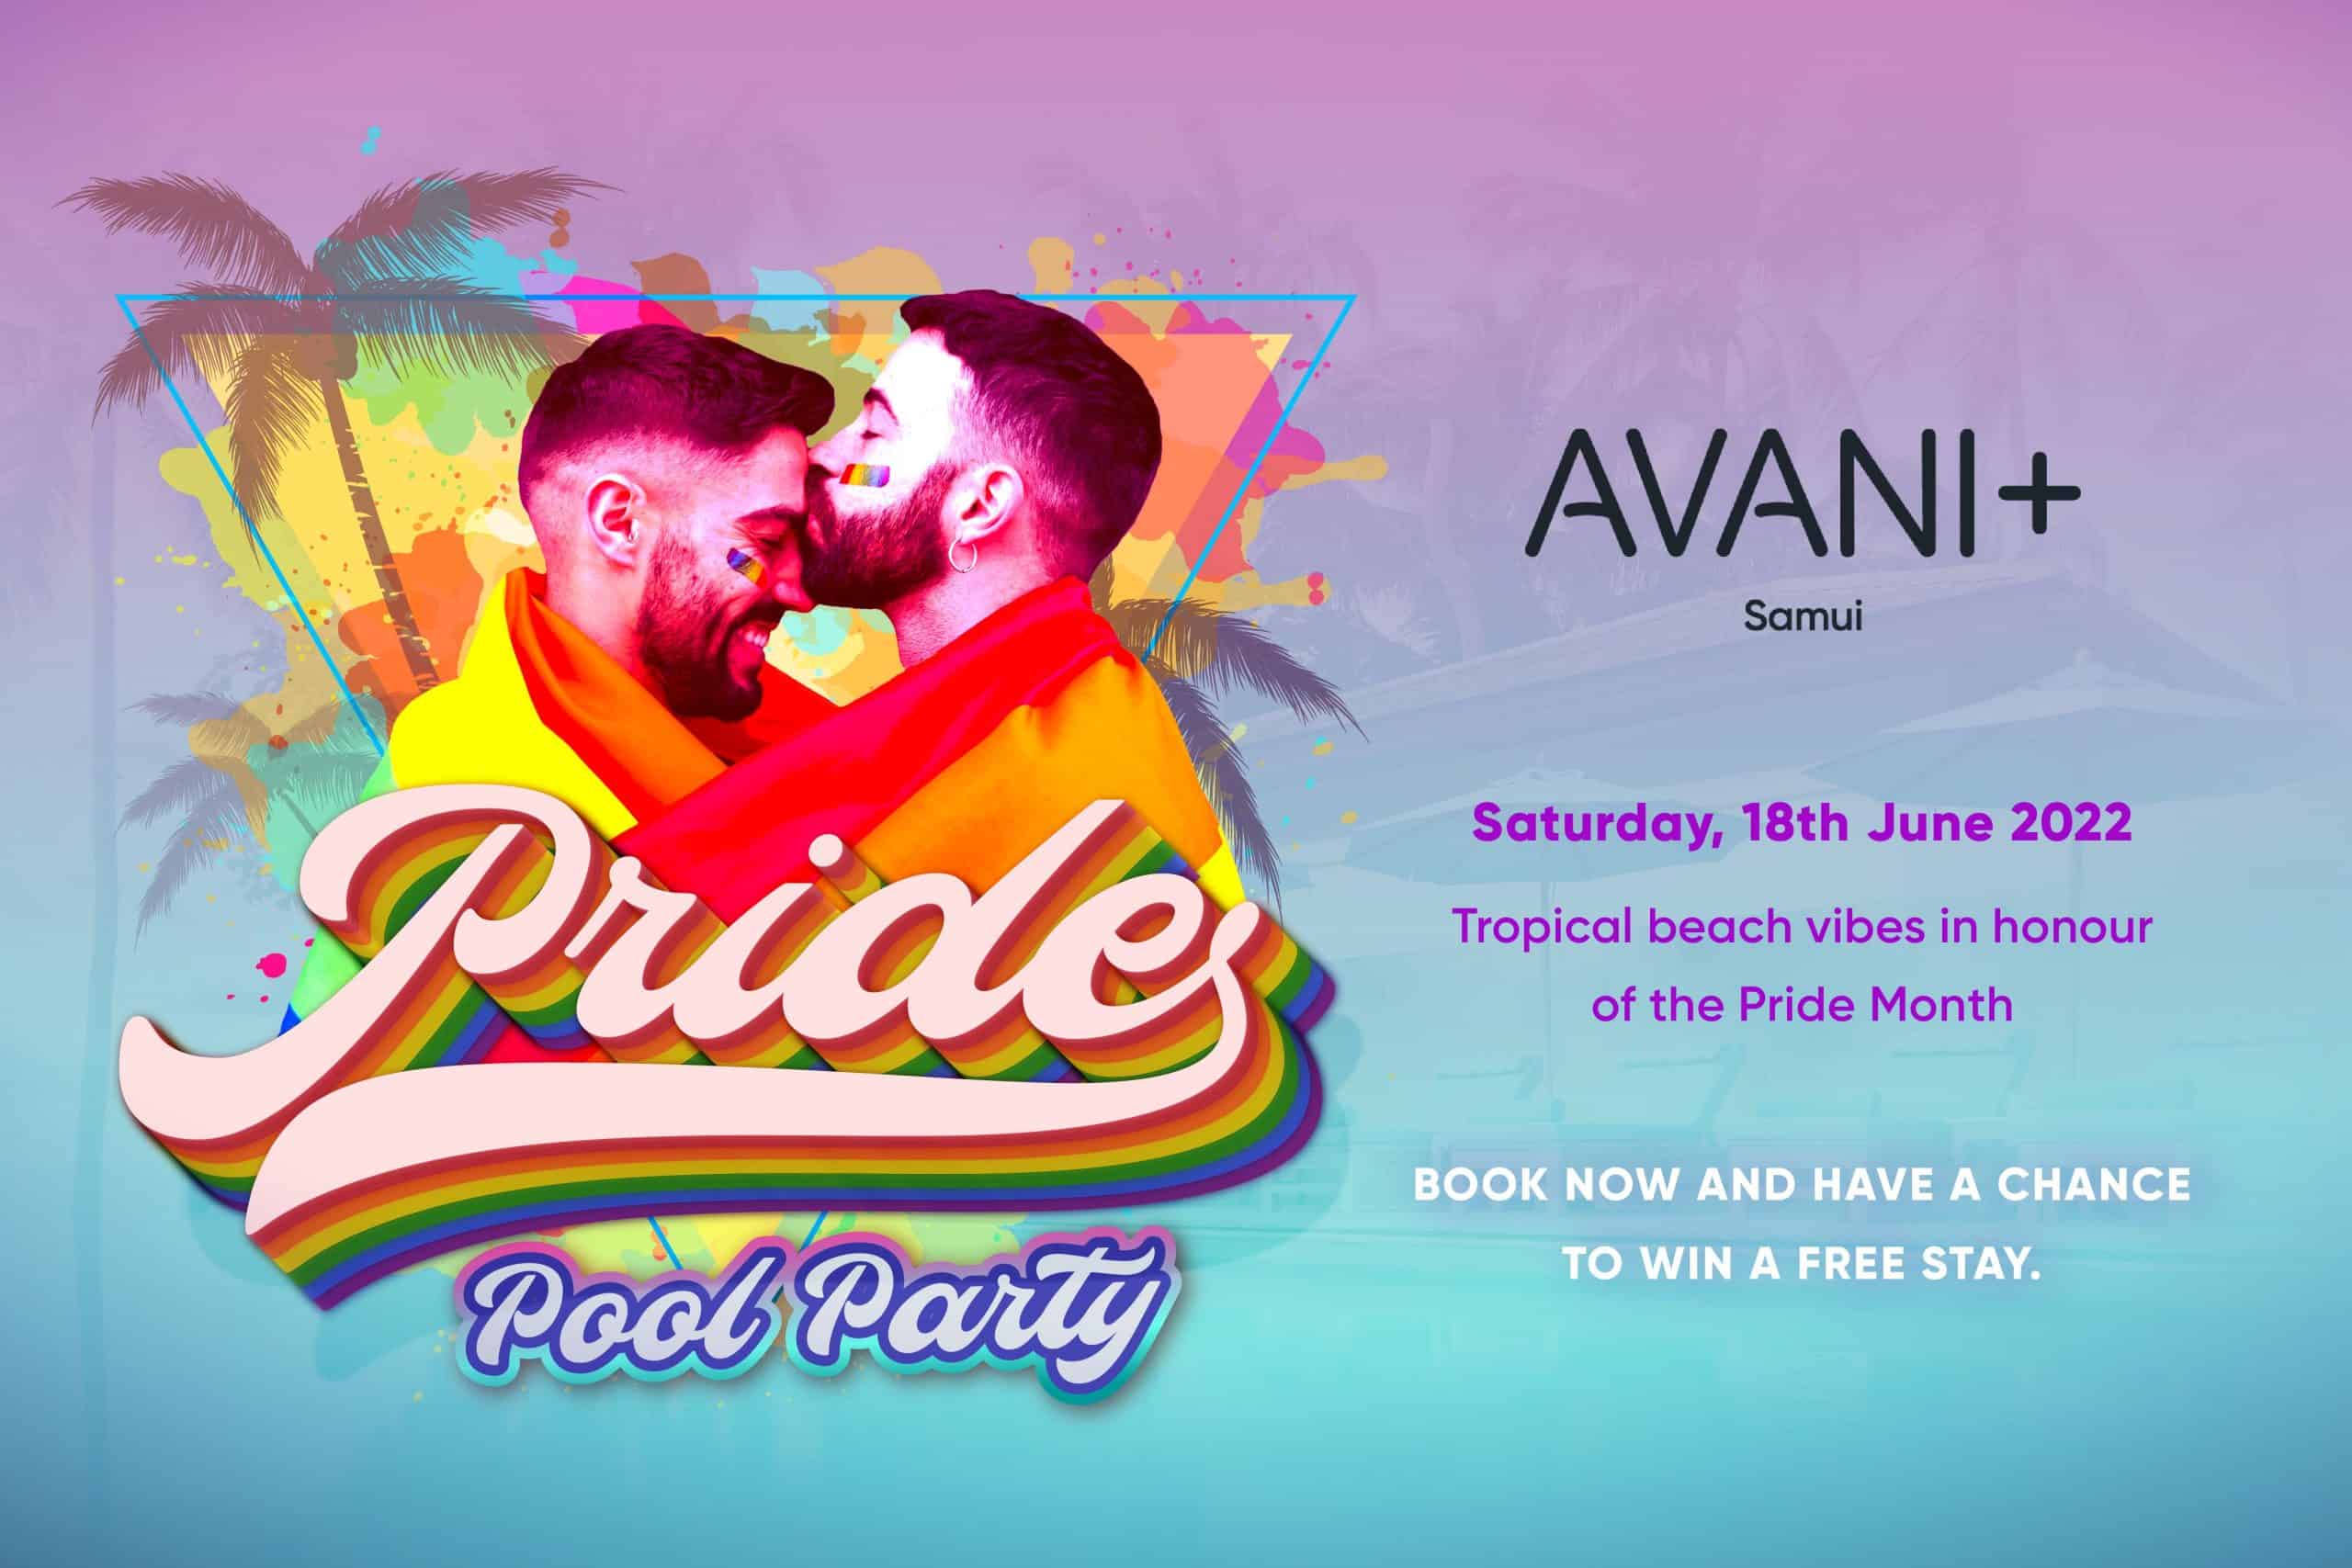 Вечеринка у бассейна Avani+ Pride